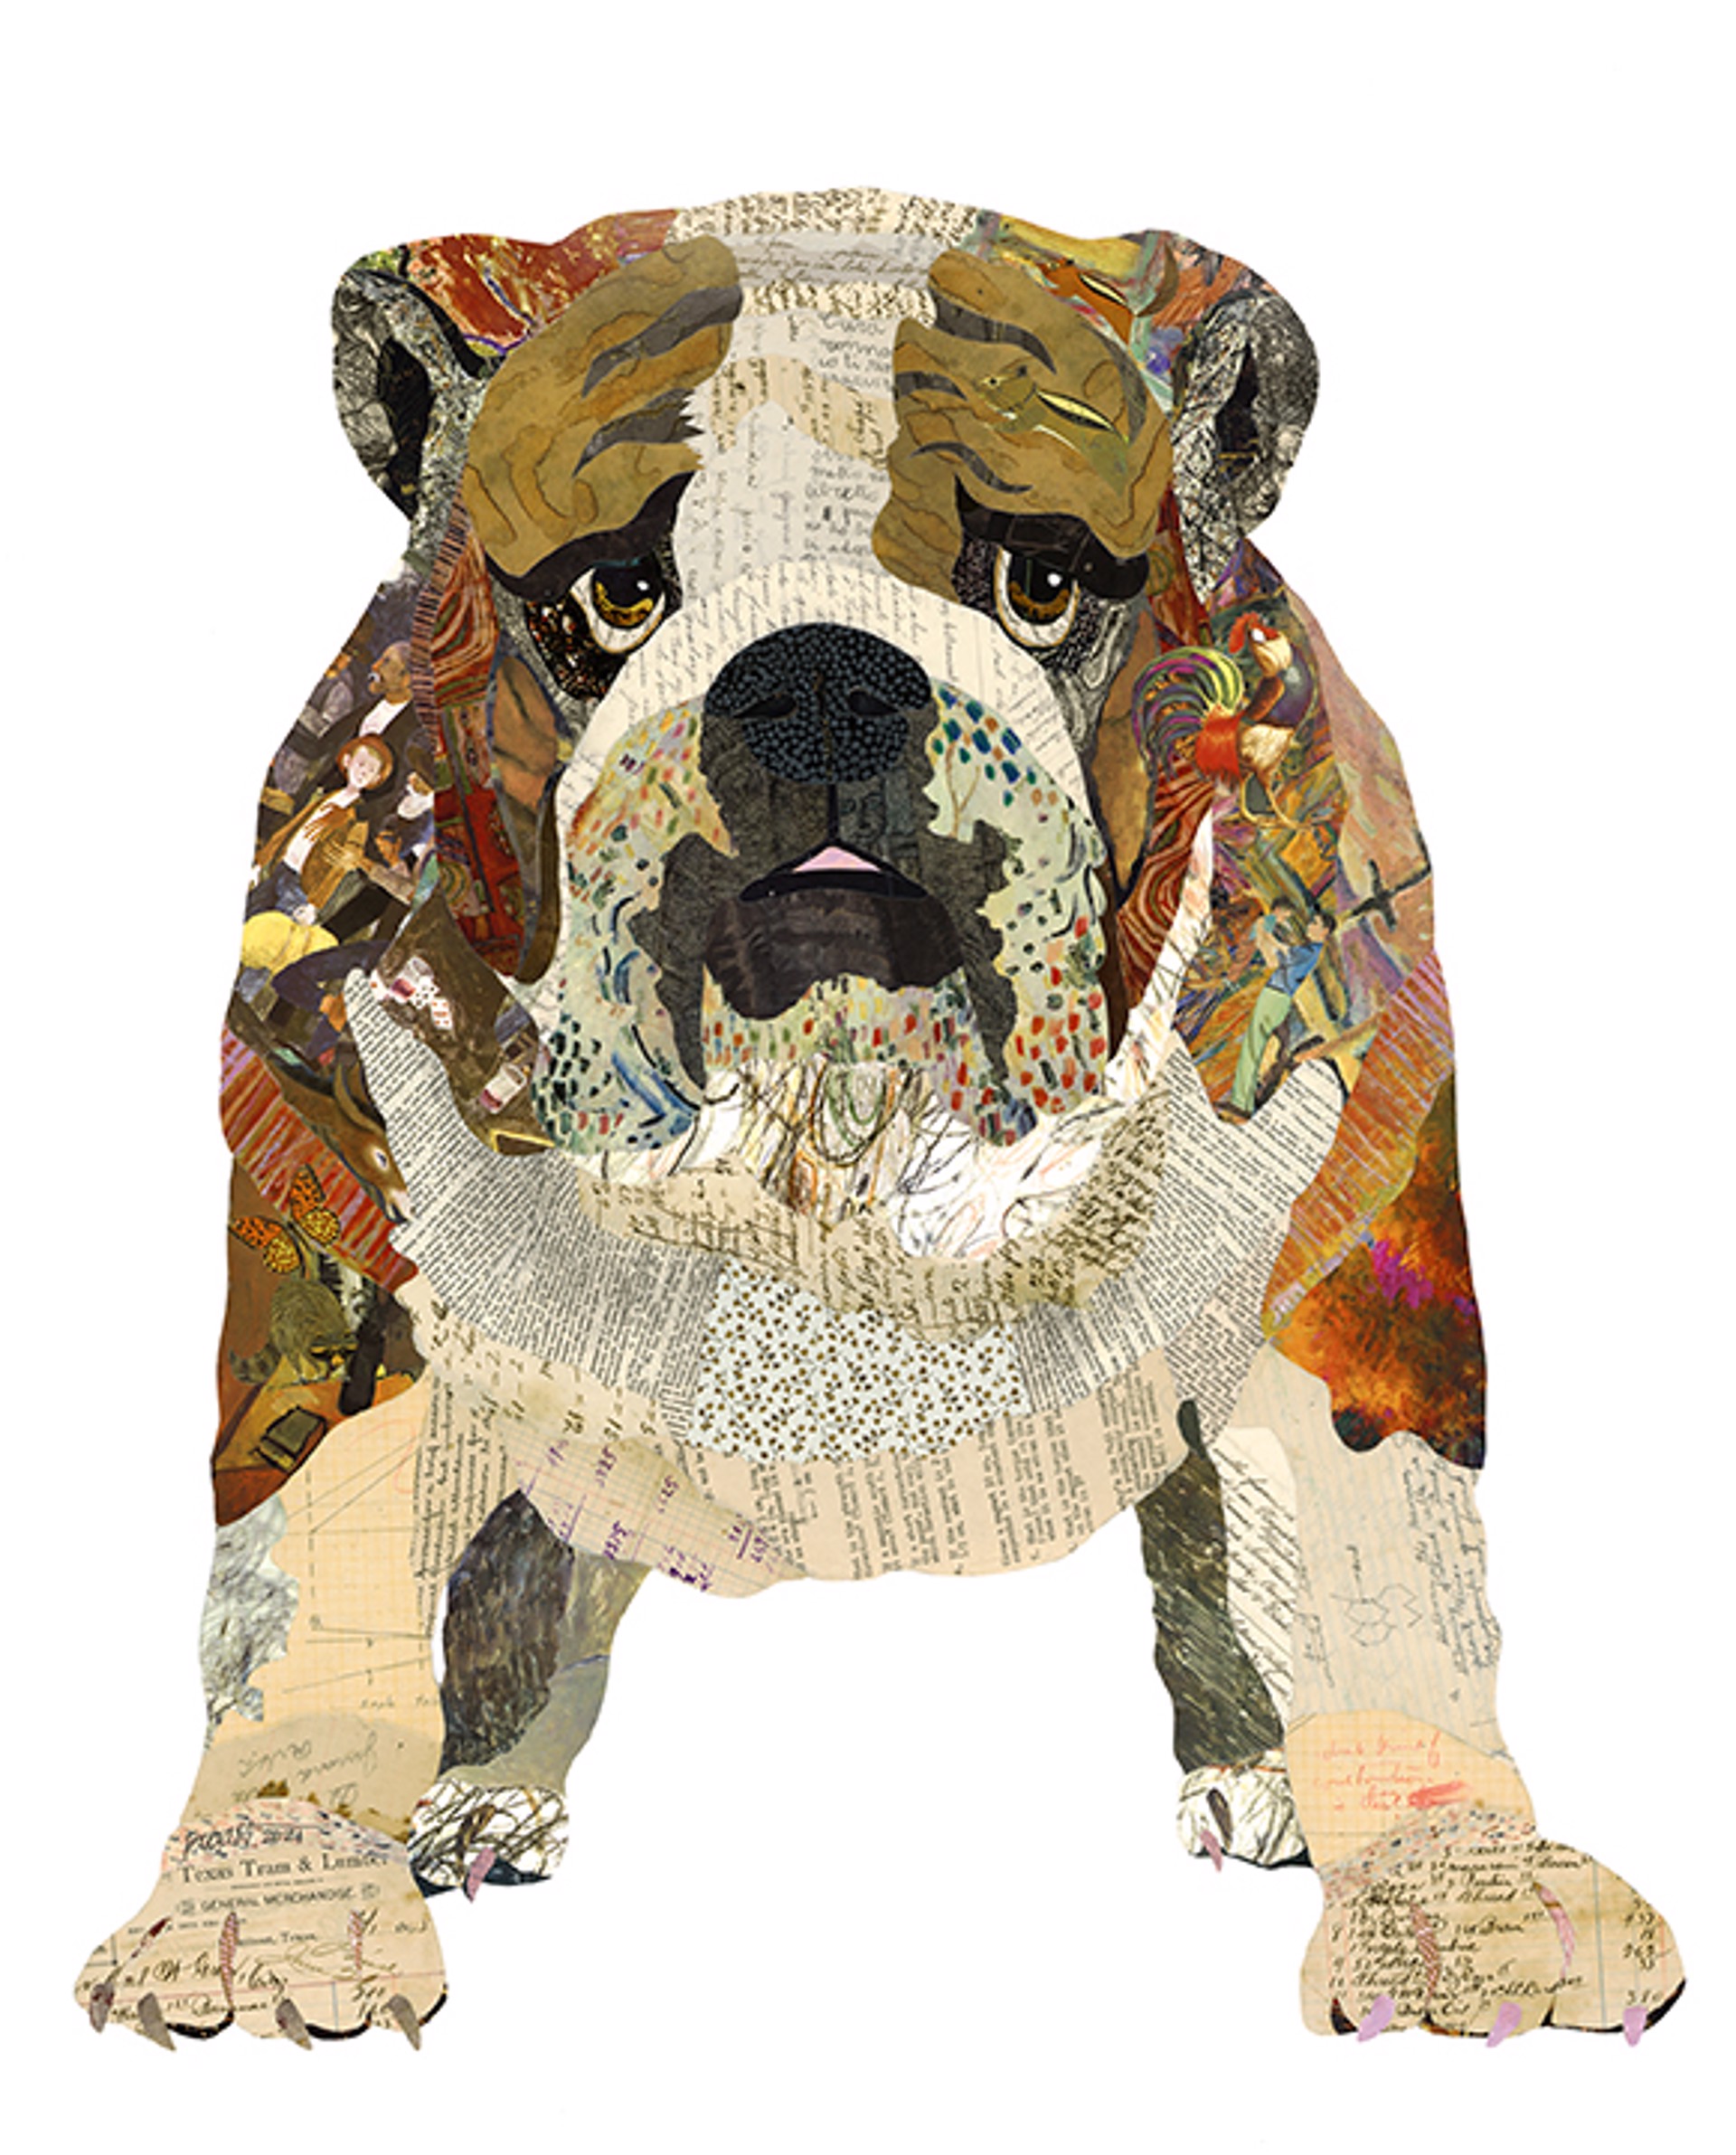 Bulldog 2 by Brenda Bogart - Prints